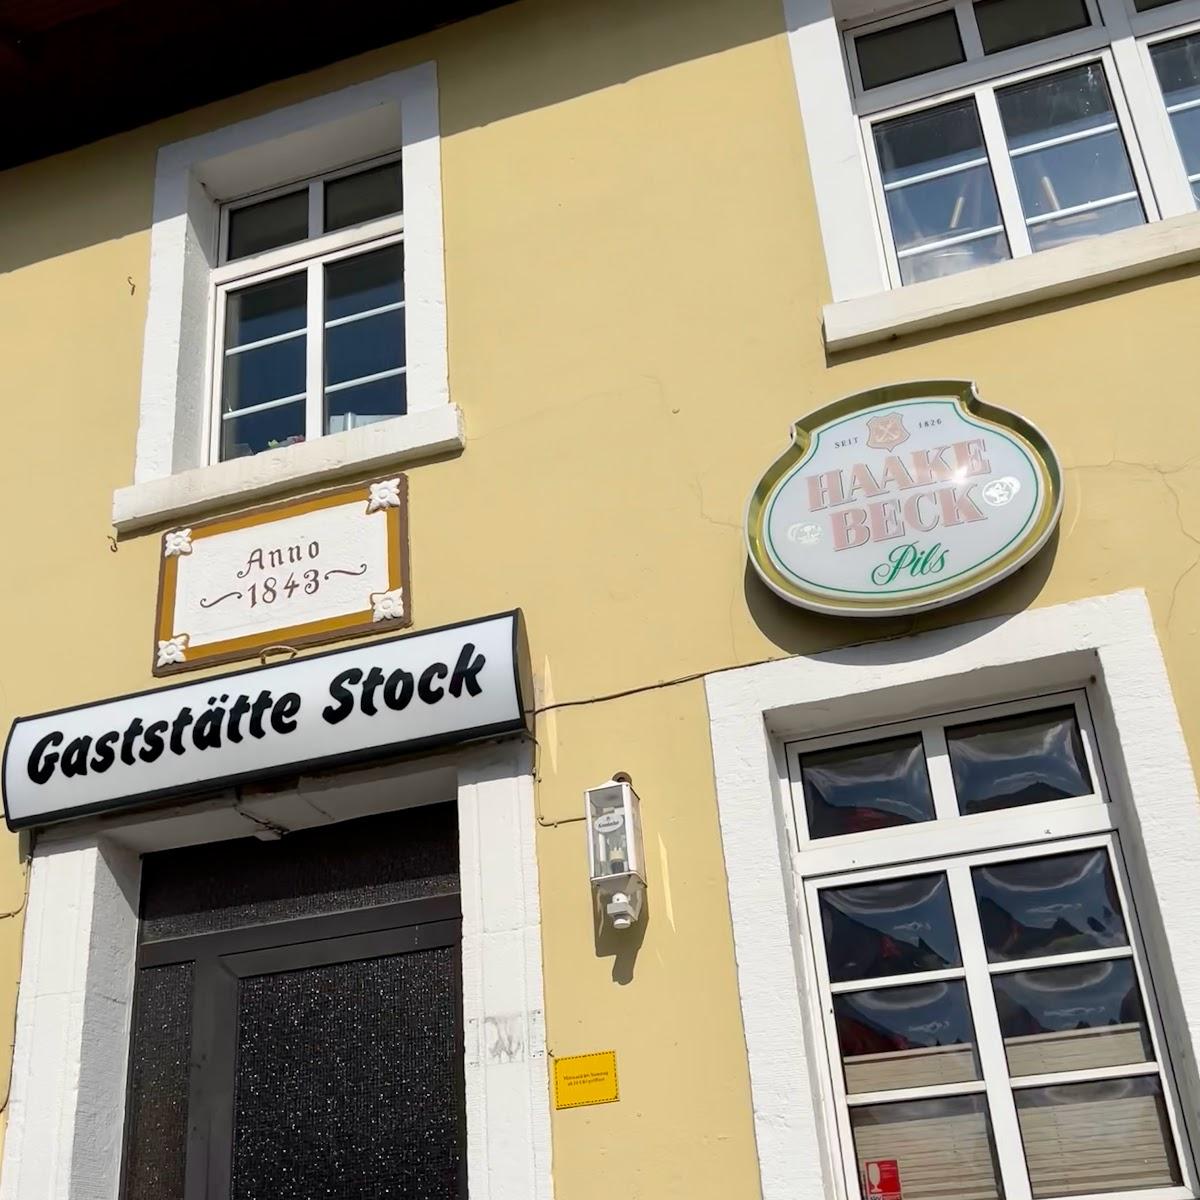 Restaurant "Gaststätte Stock" in Hagen am Teutoburger Wald